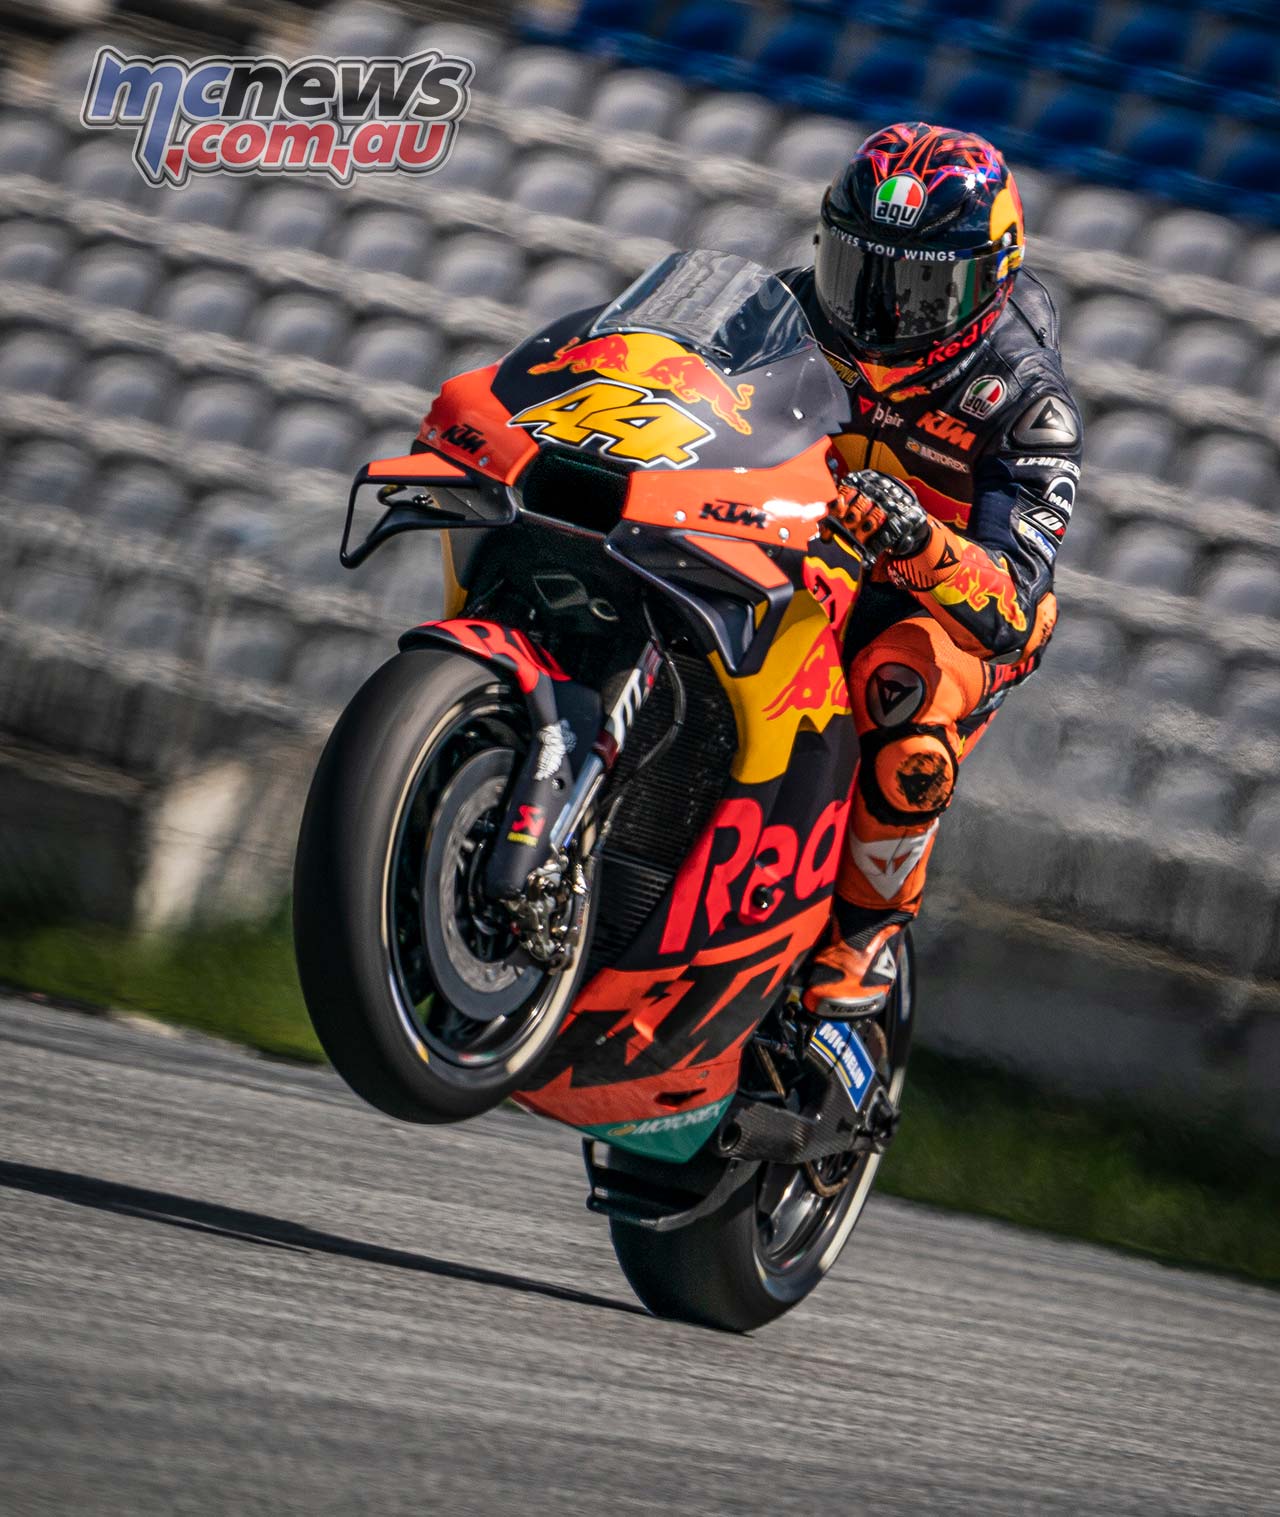 KTM MotoGP back in action at Red Bull Ring